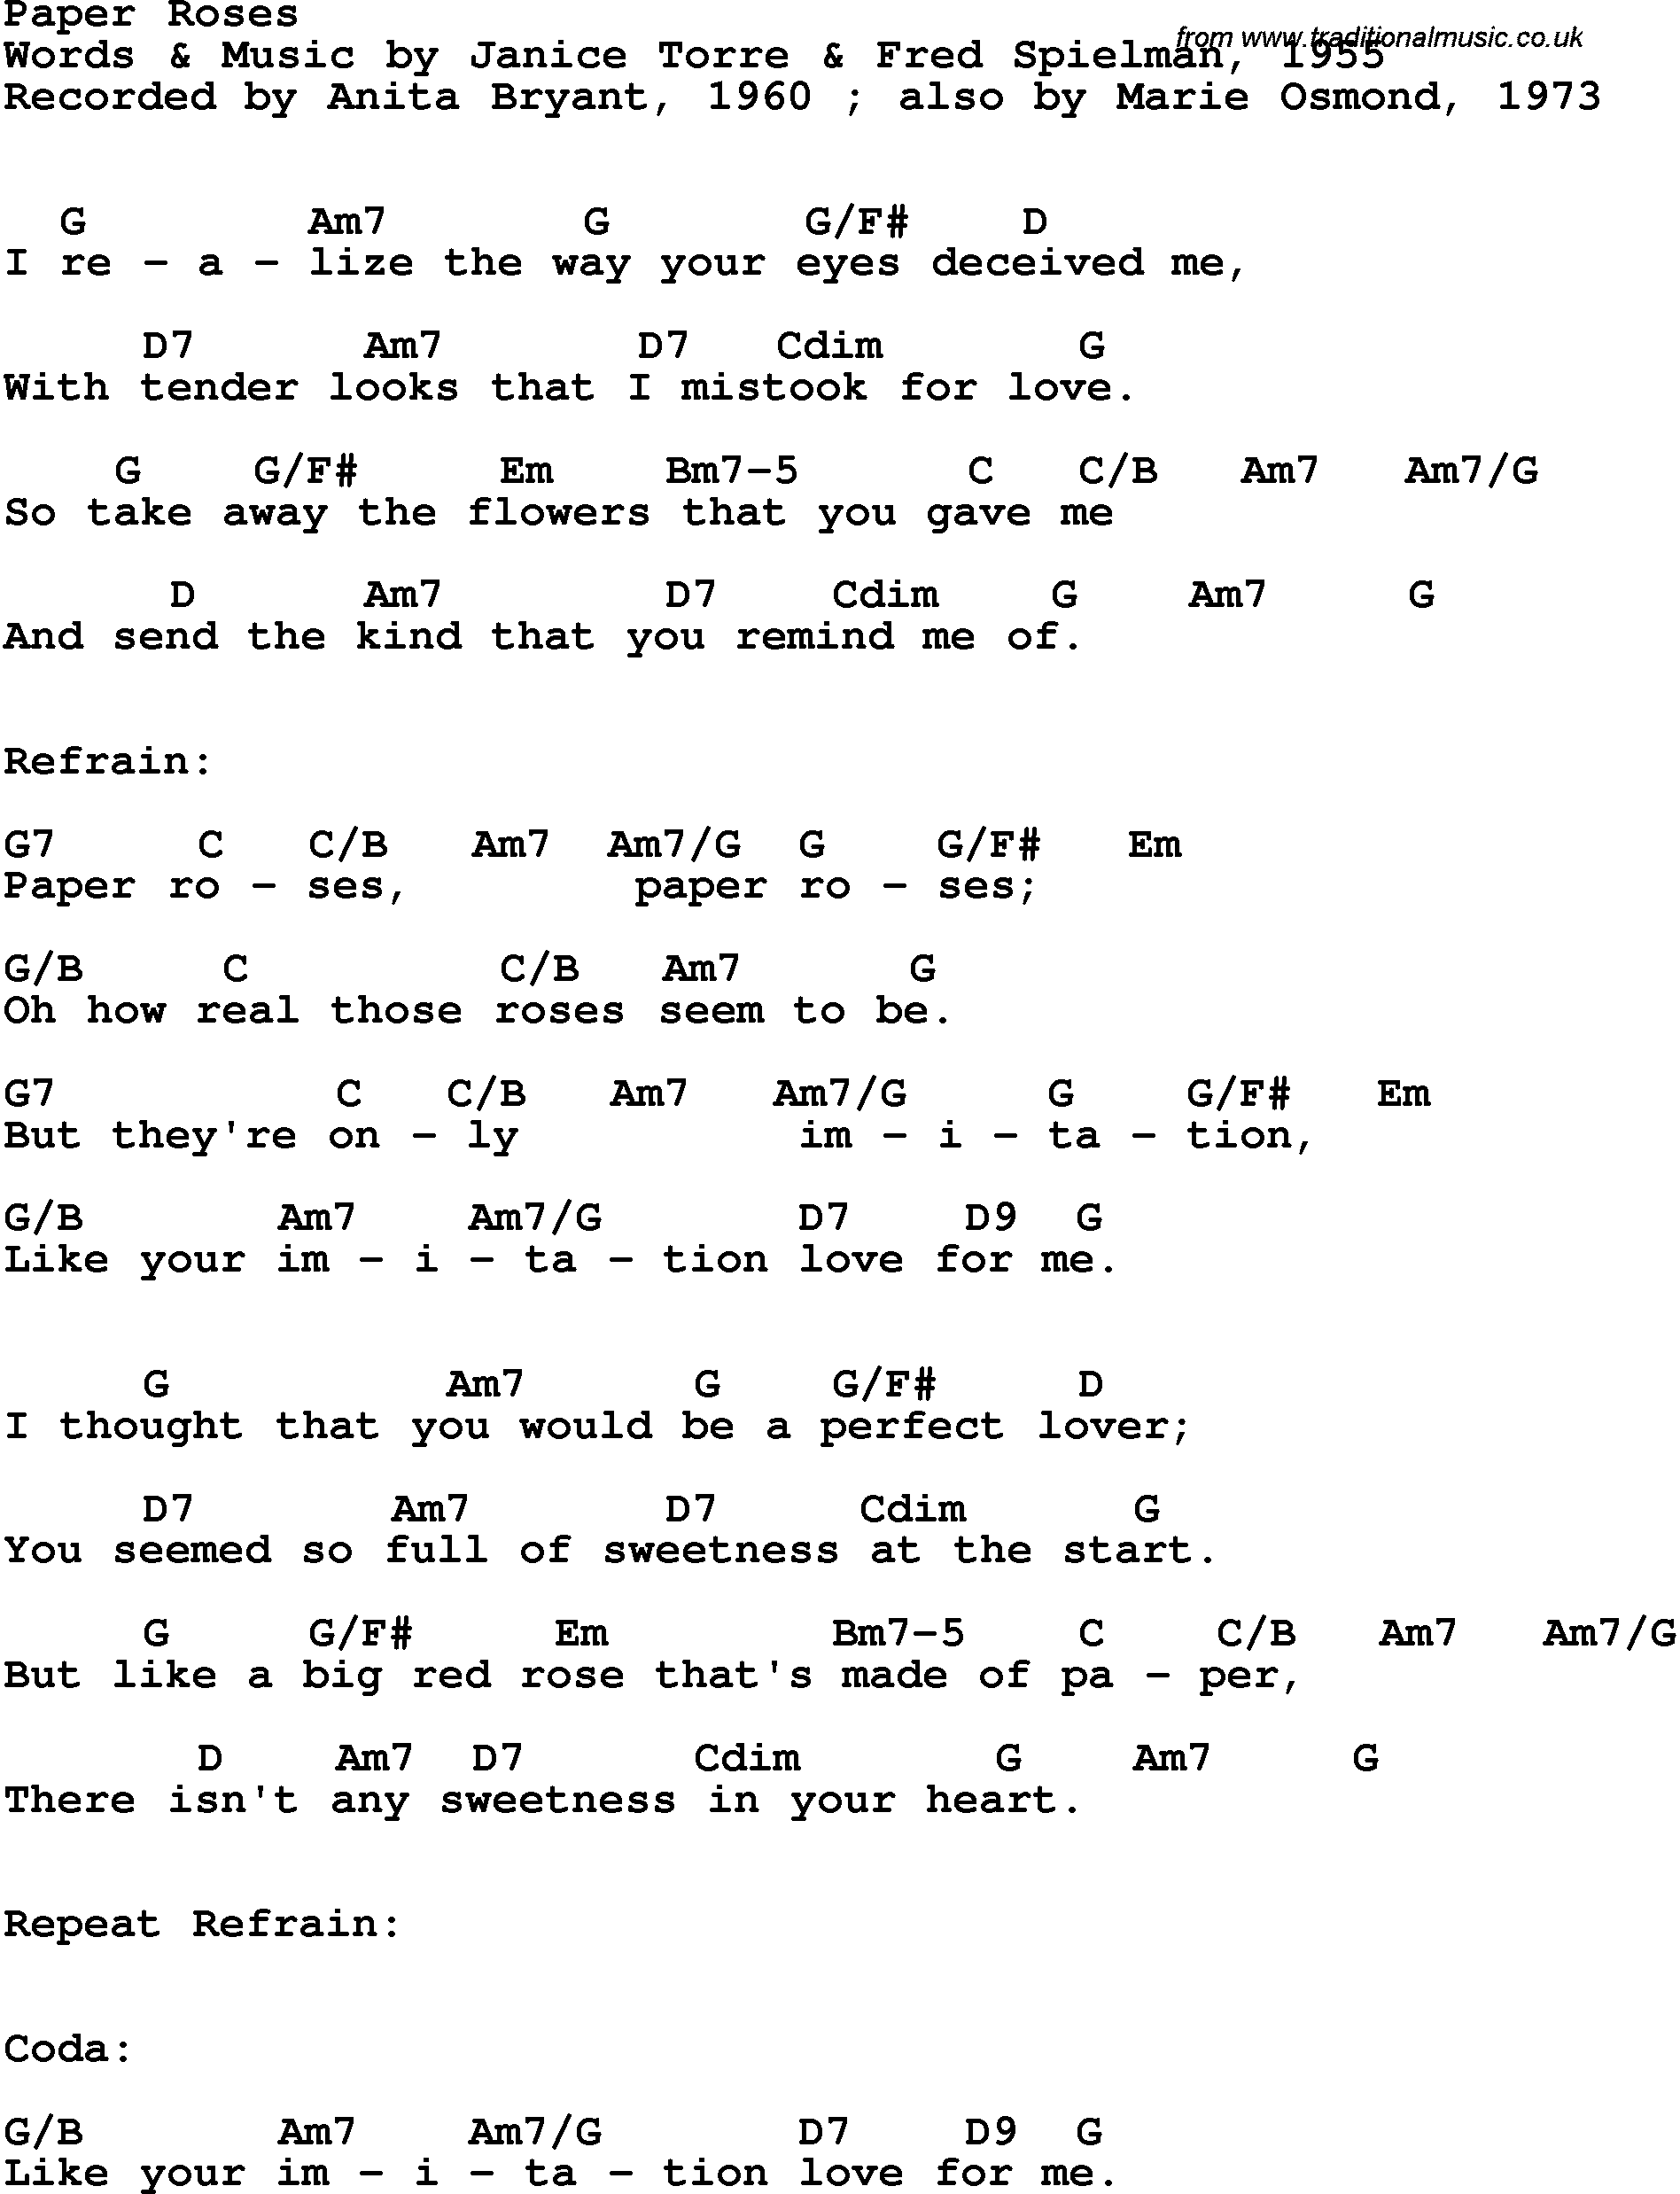 Song Lyrics with guitar chords for Paper Roses - Anita Bryant, 1960